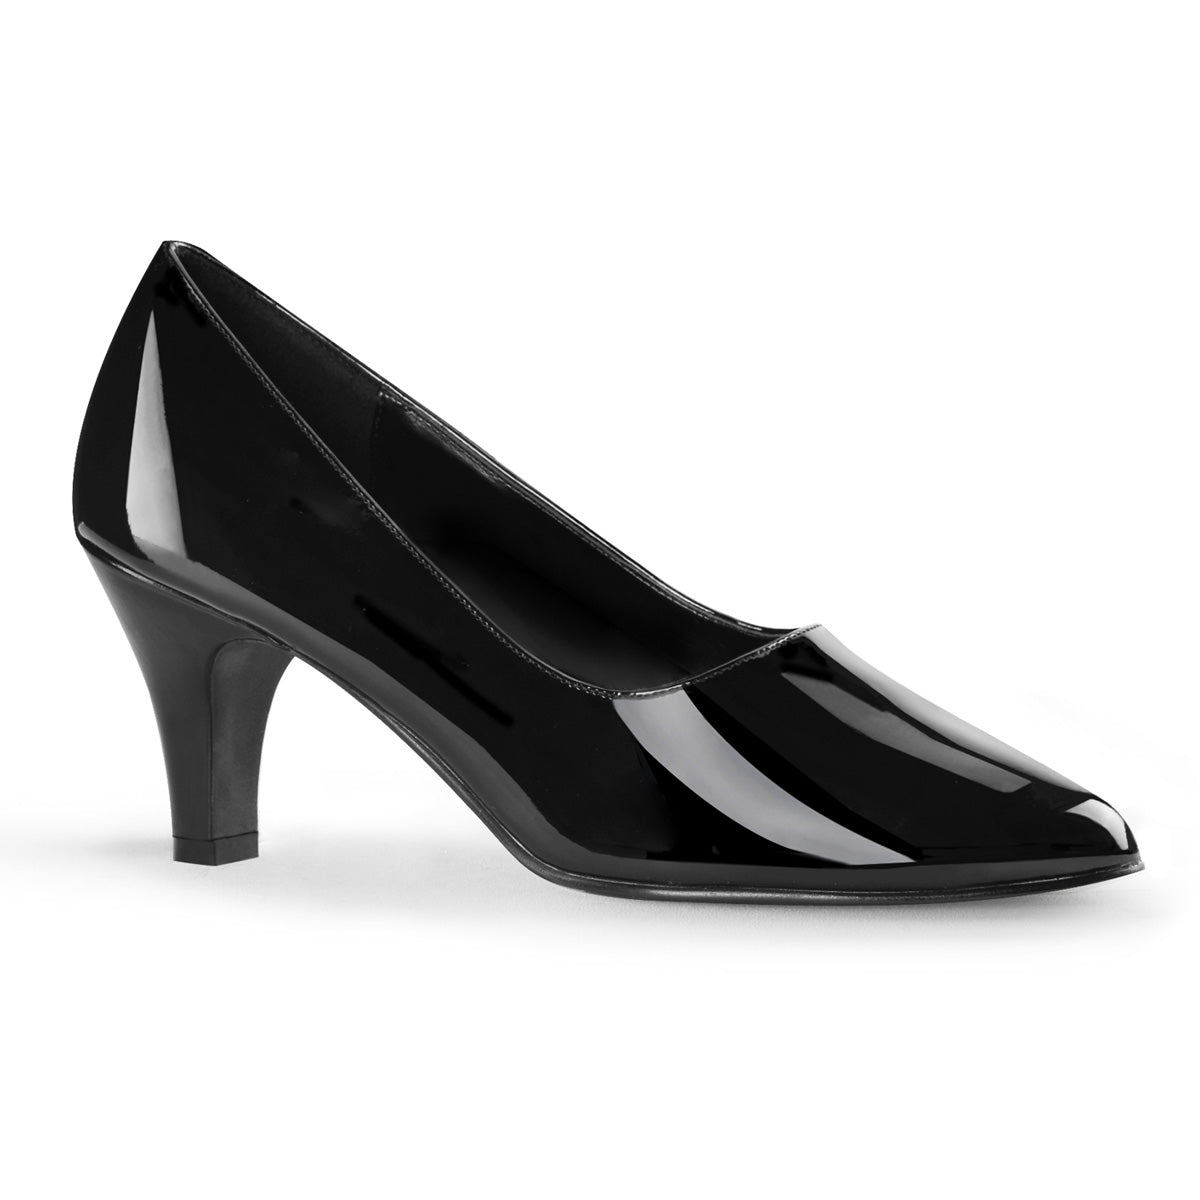 DIVINE-420 Large Size Ladies Shoes 3" Heel Black Patent Fetish Footwear